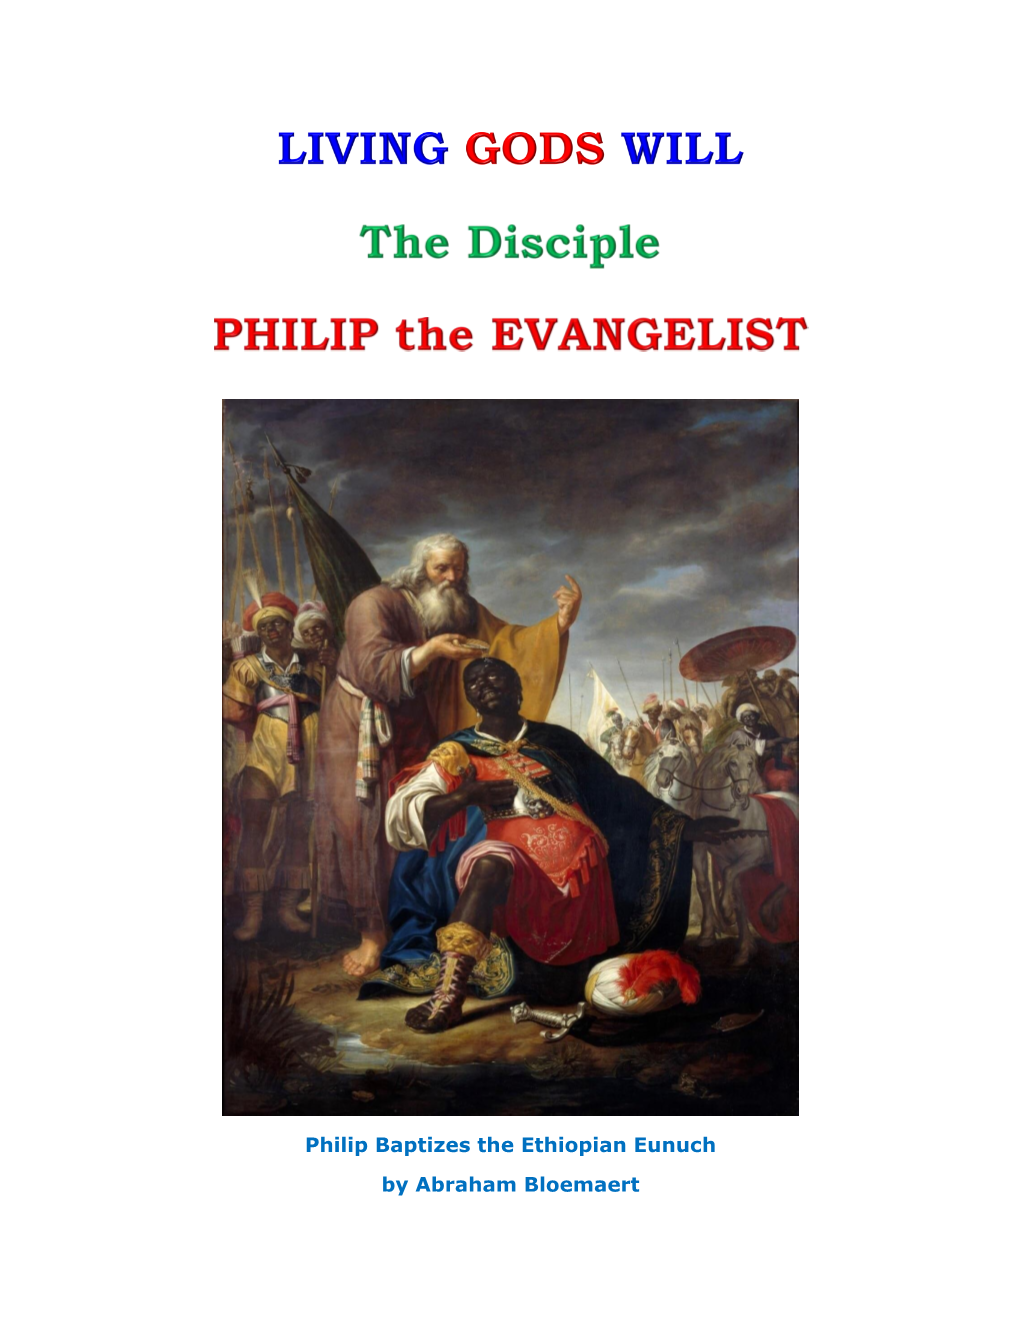 Philip Baptizes the Ethiopian Eunuch by Abraham Bloemaert the Disciple PHILIP the EVANGELIST Page 1